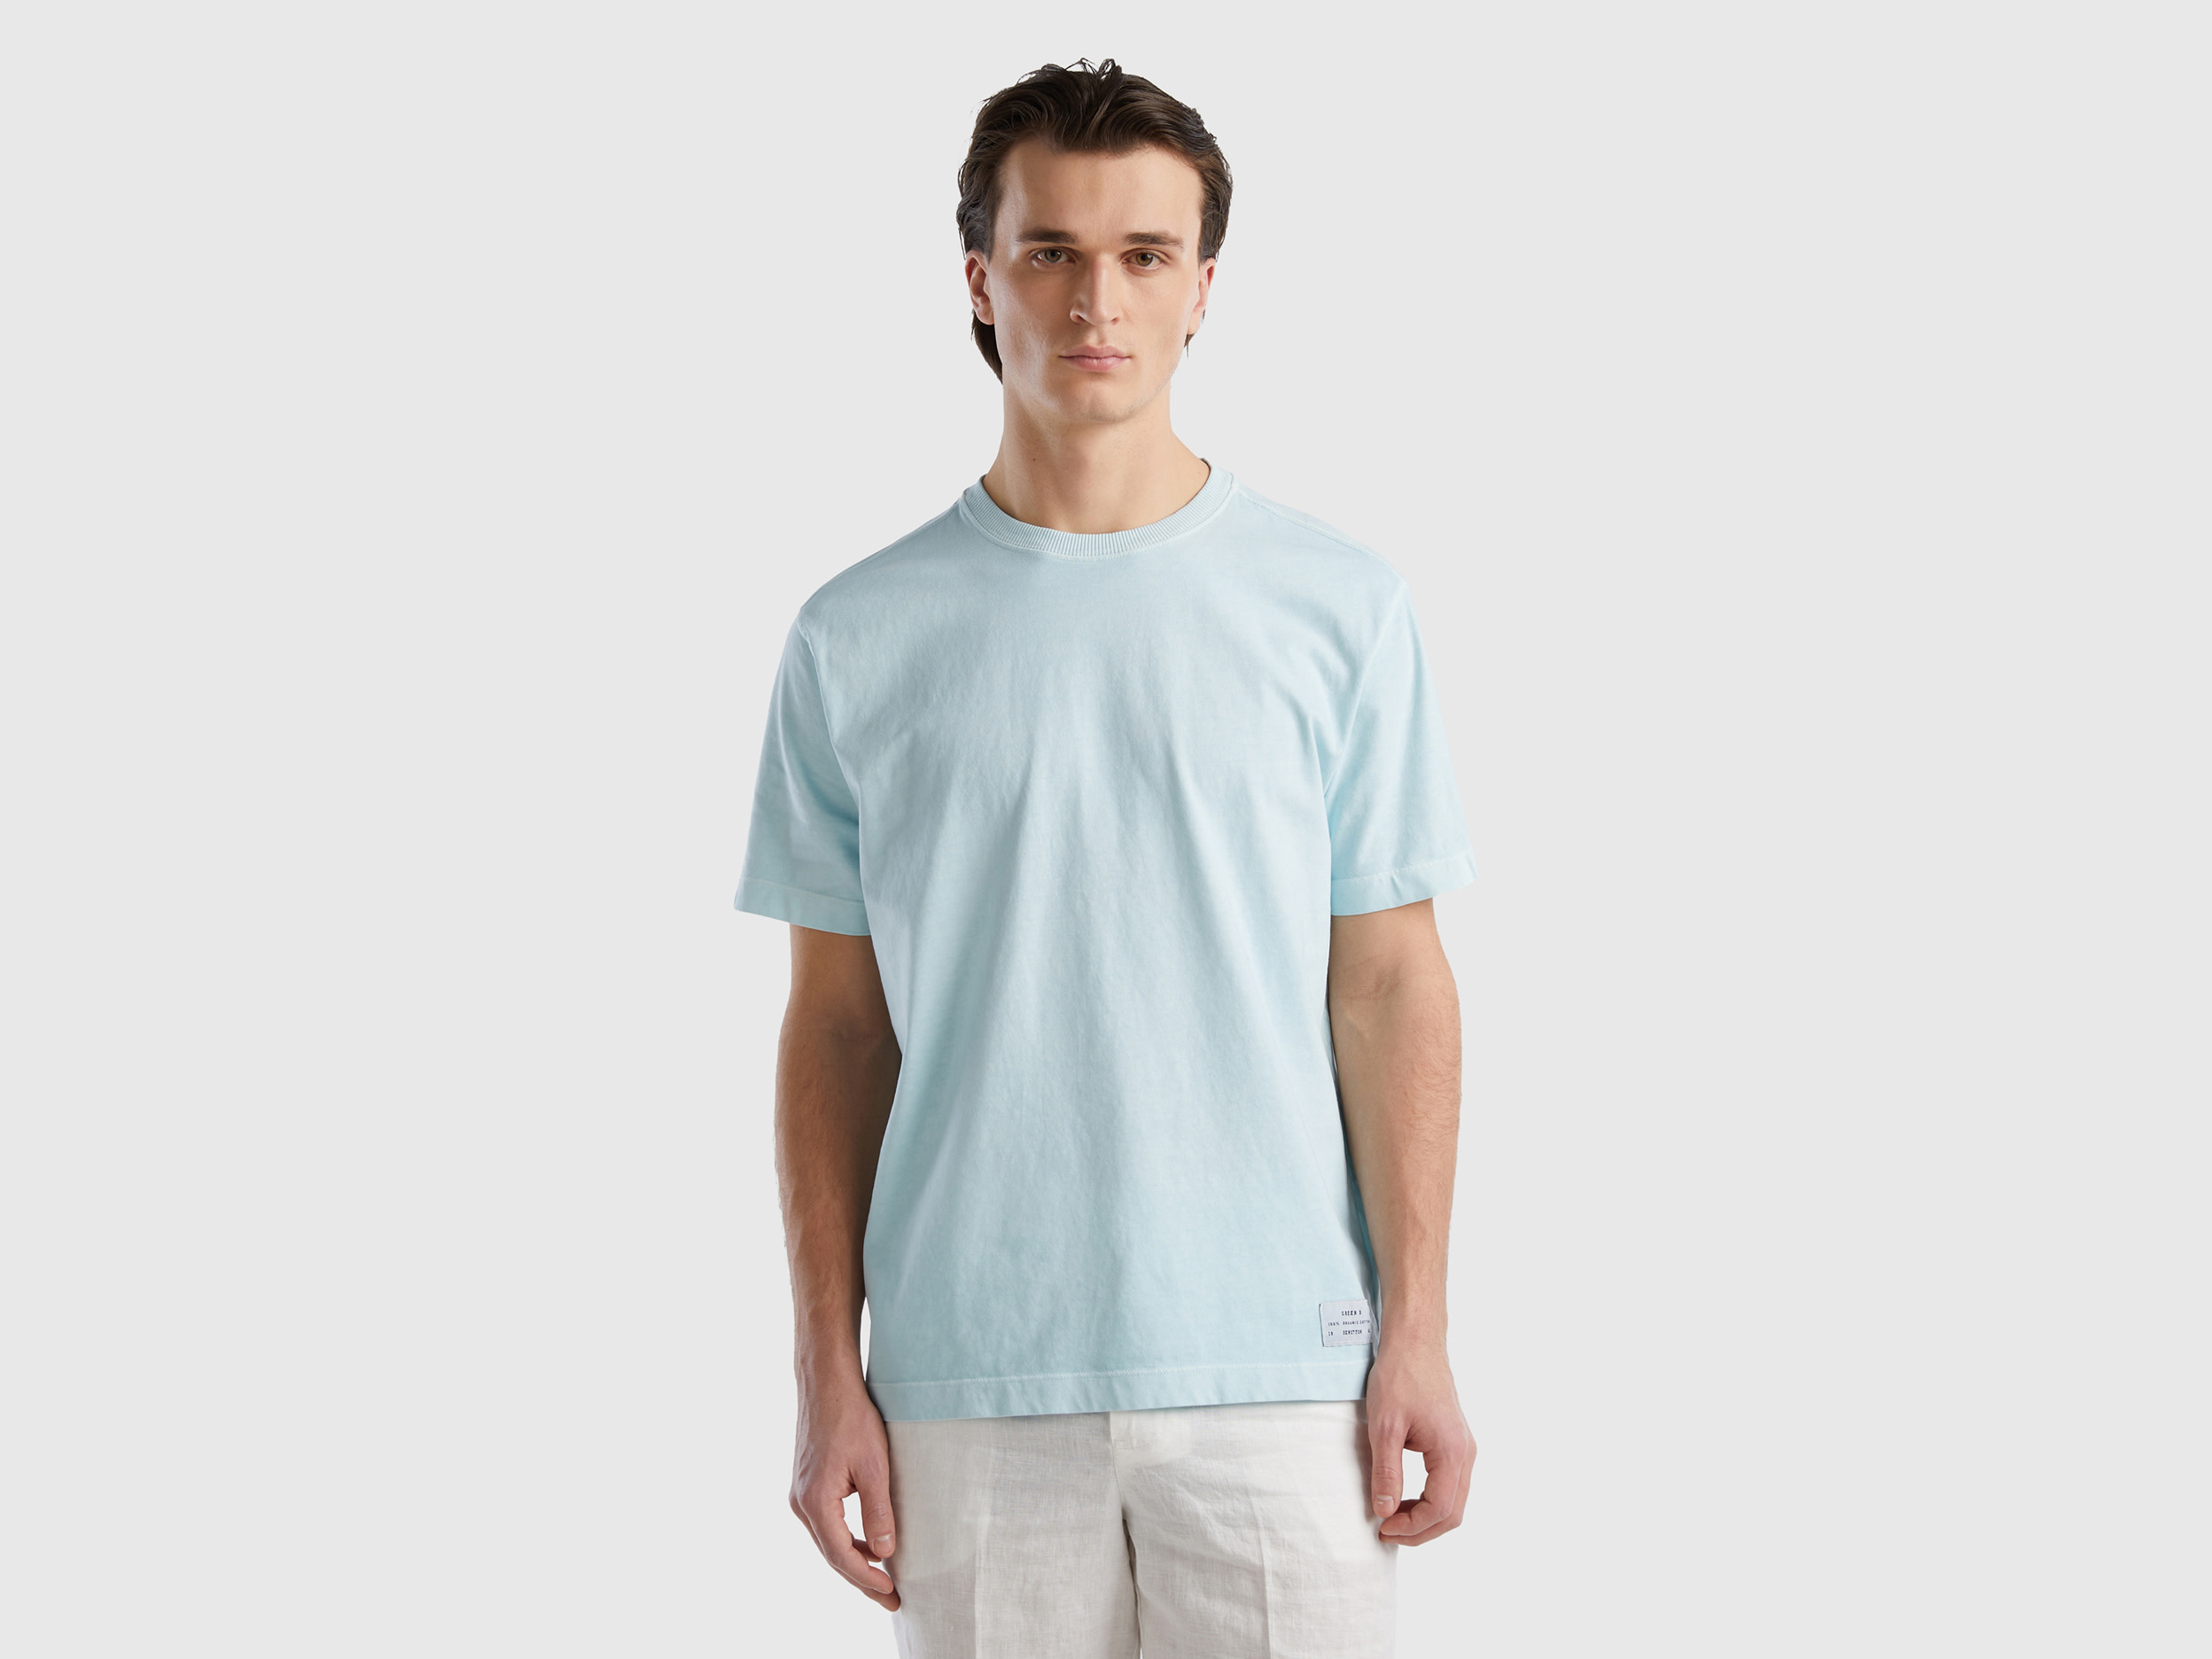 Benetton, 100% Organic Cotton Crew Neck T-shirt, size XXL, Aqua, Men